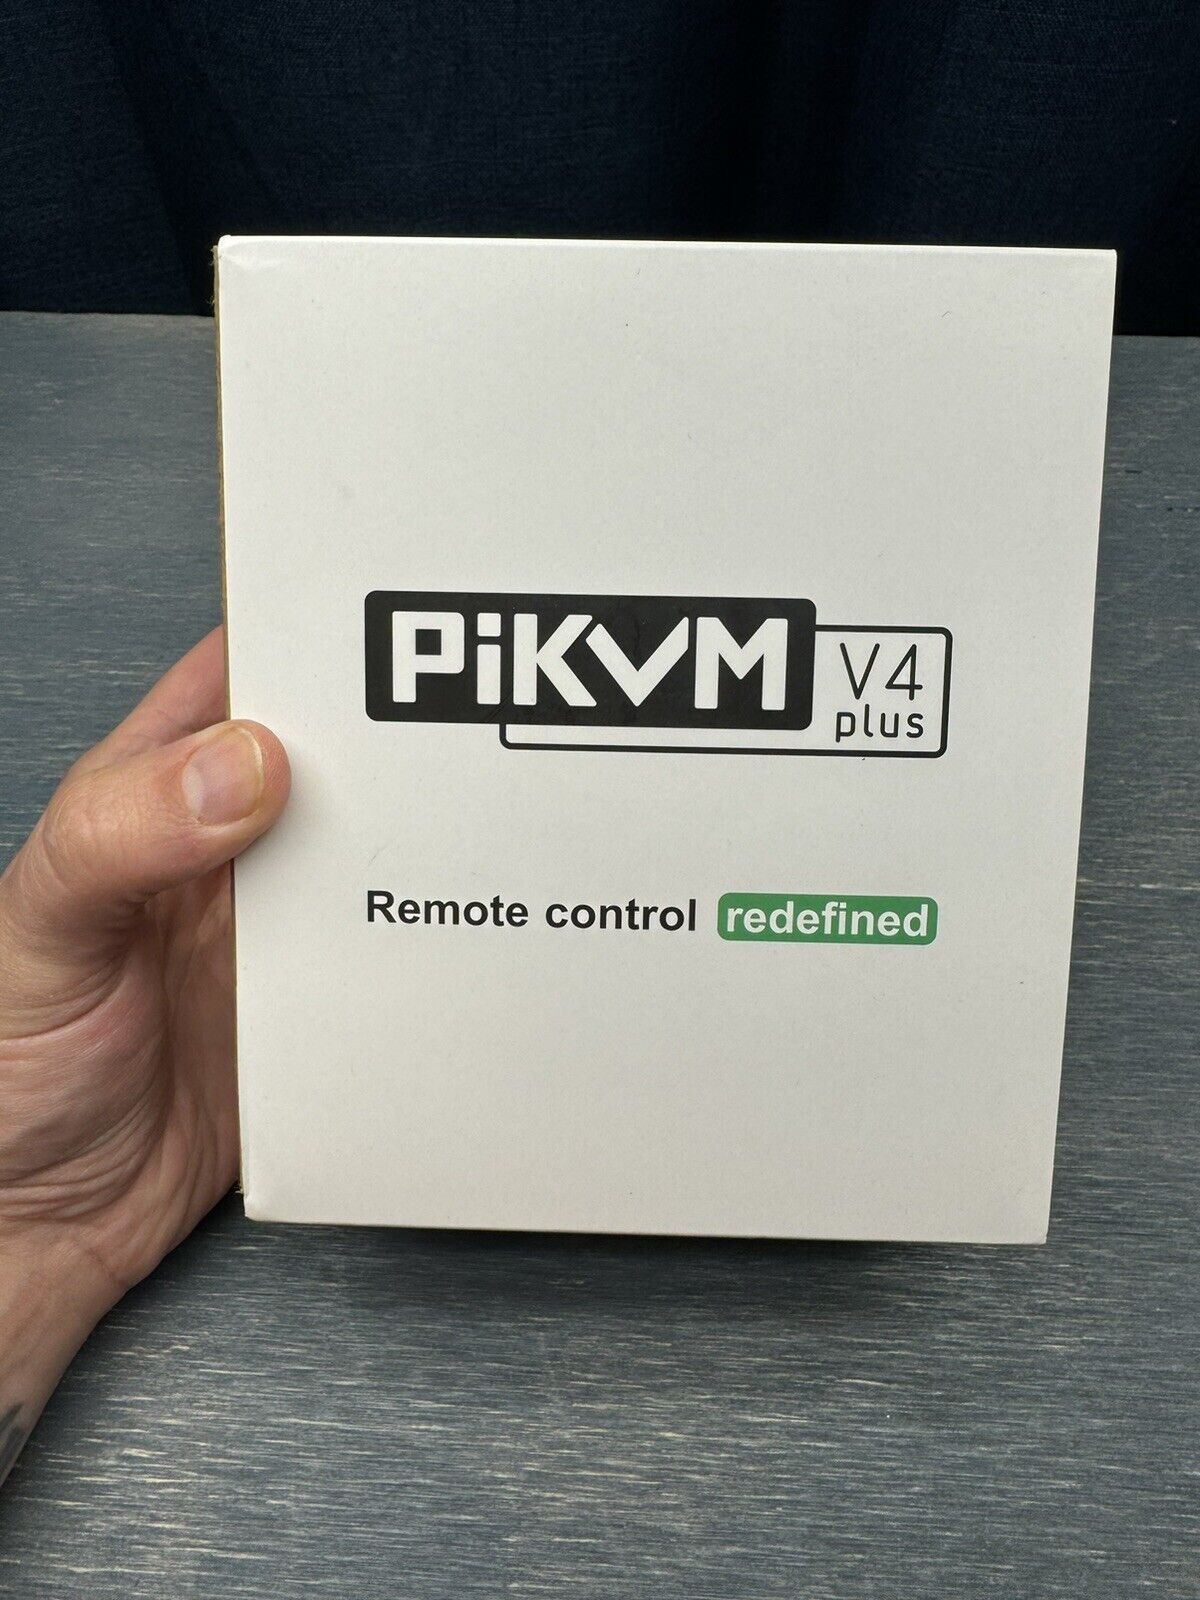 PiKVM V4 Plus Raspberry Pi based KVM Switch Device Brand New In Box 